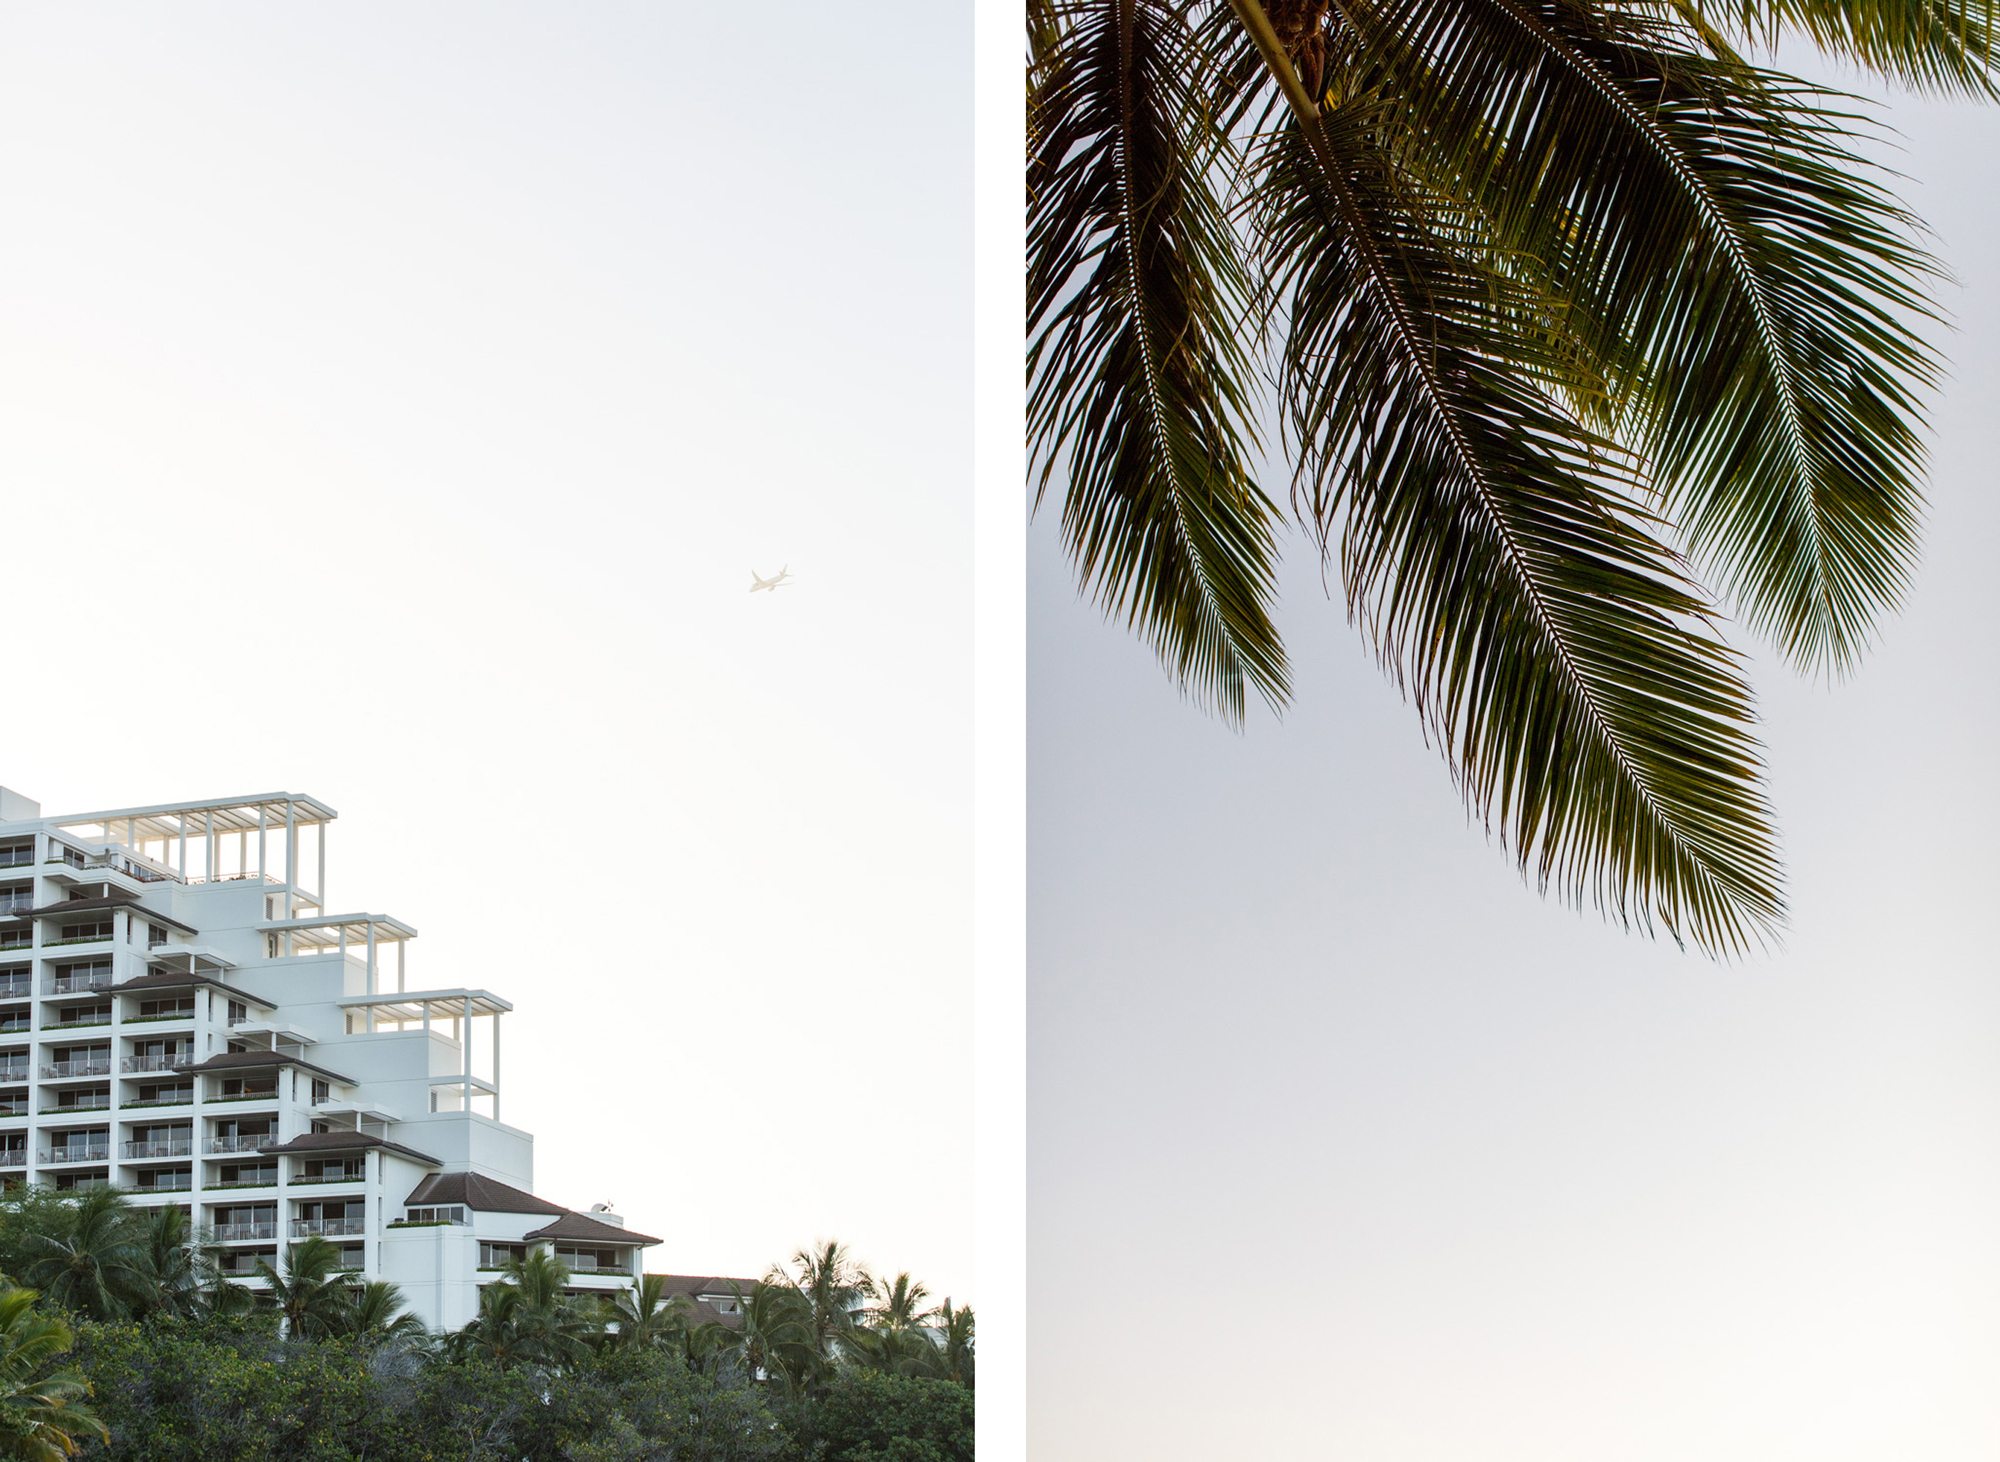 Oahu architecture, palm tree comparison